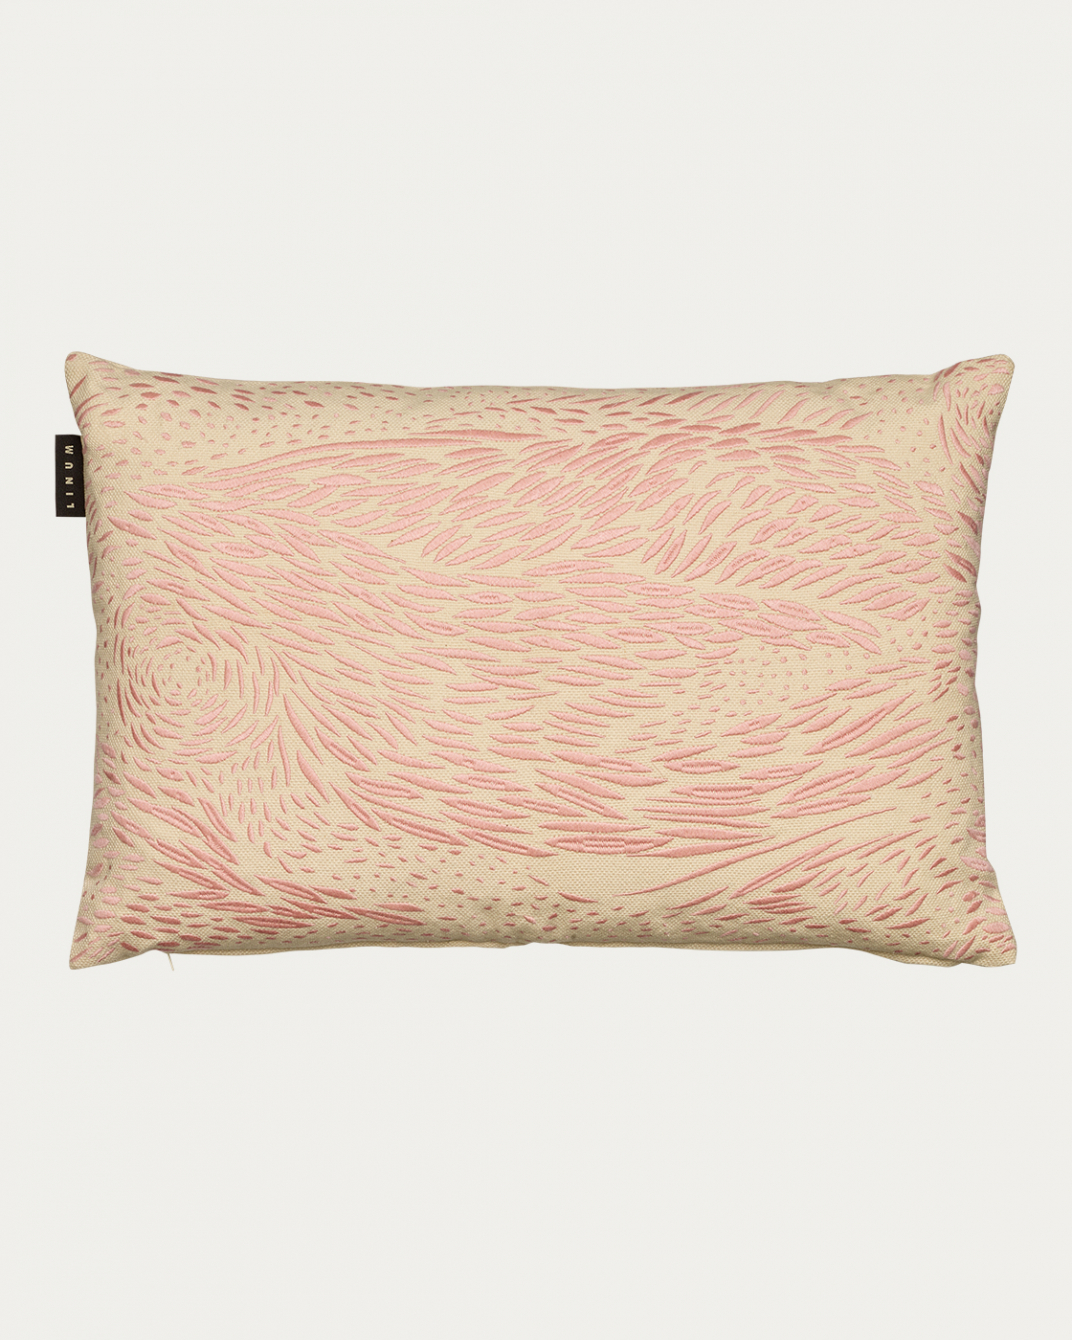 STROMBOLI Cushion cover 40x60 cm Misty grey pink